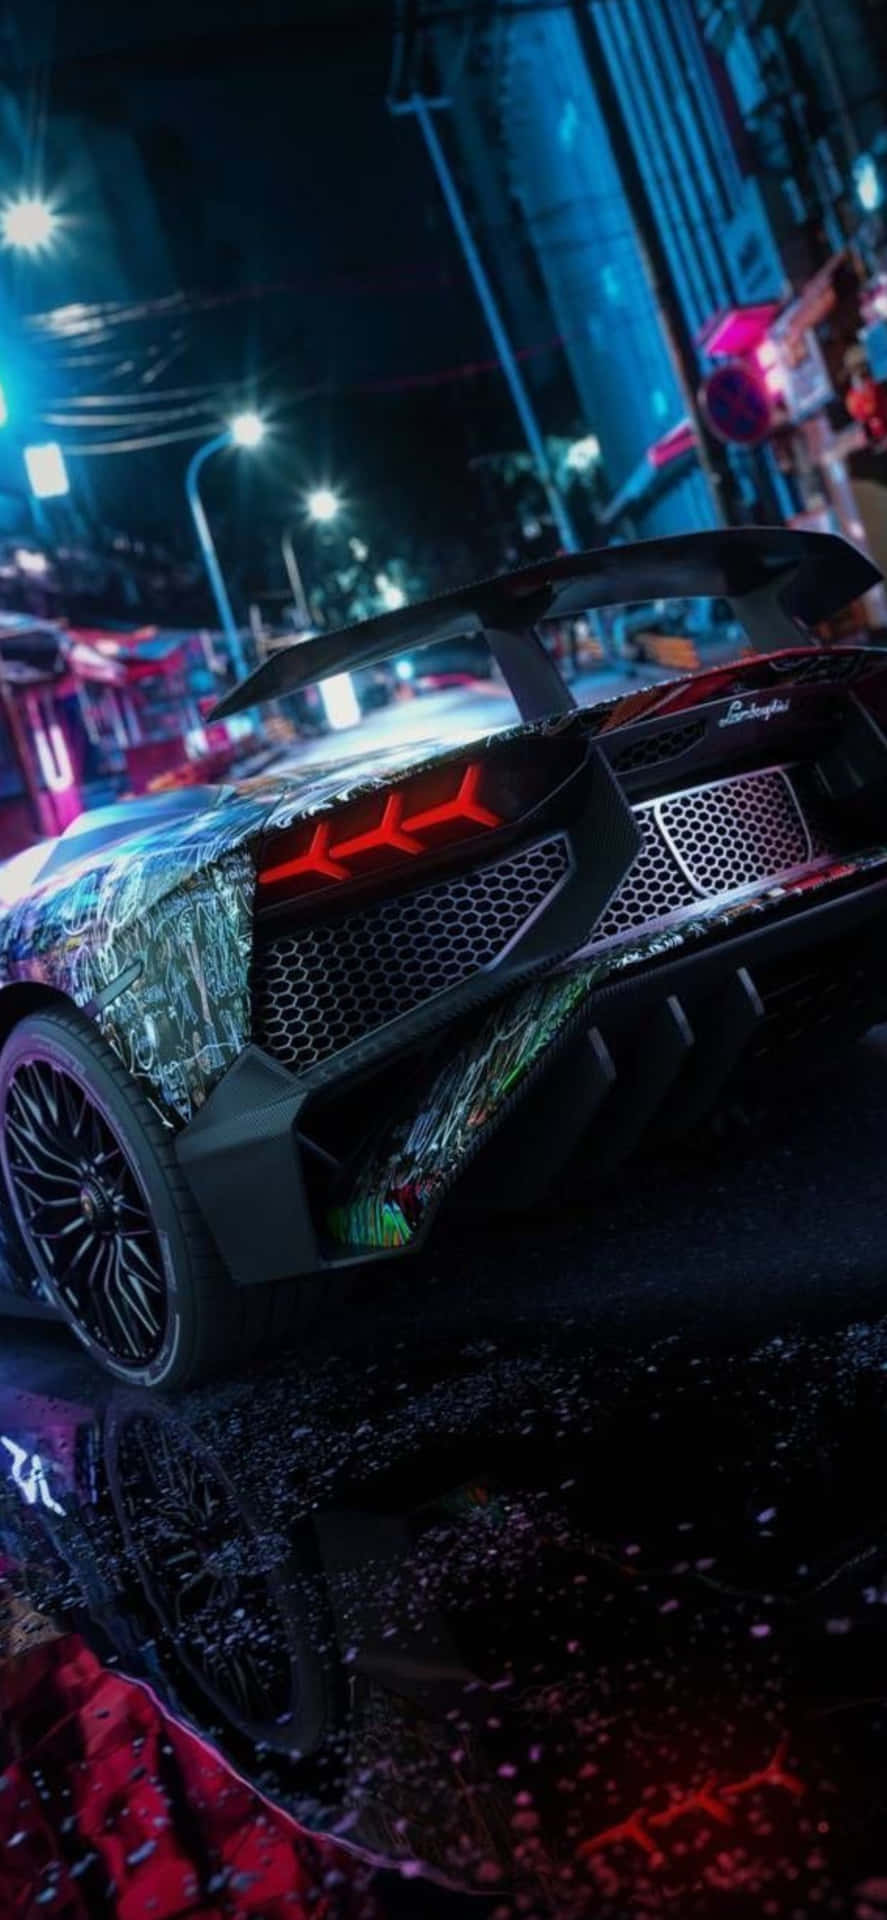 Iphonexs Max Lamborghini Aventador Bakgrundsbild